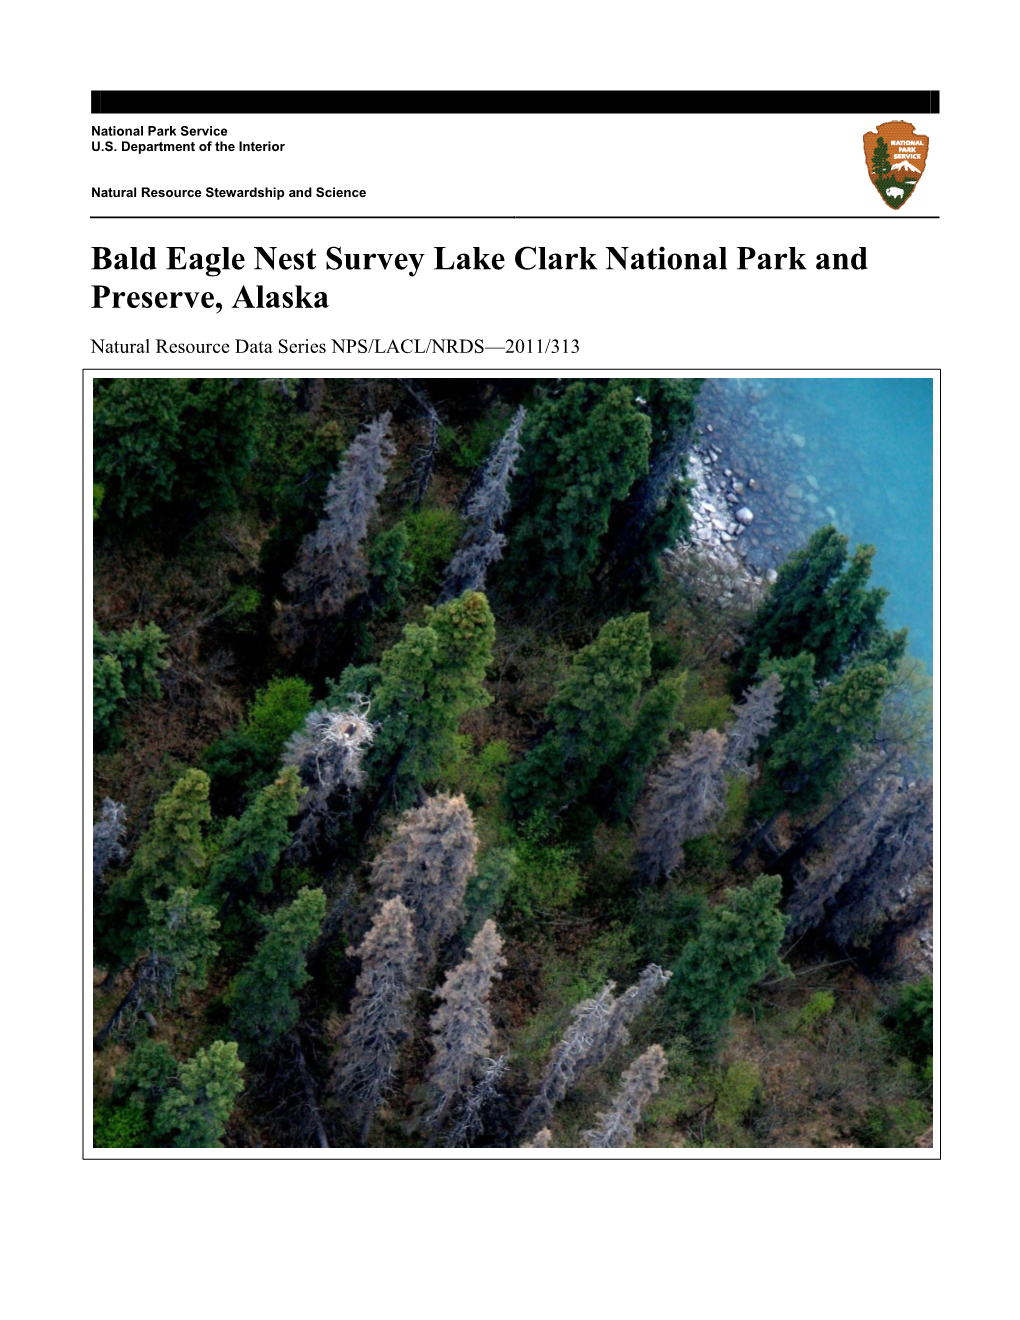 Bald Eagle Nest Survey Lake Clark National Park and Preserve, Alaska